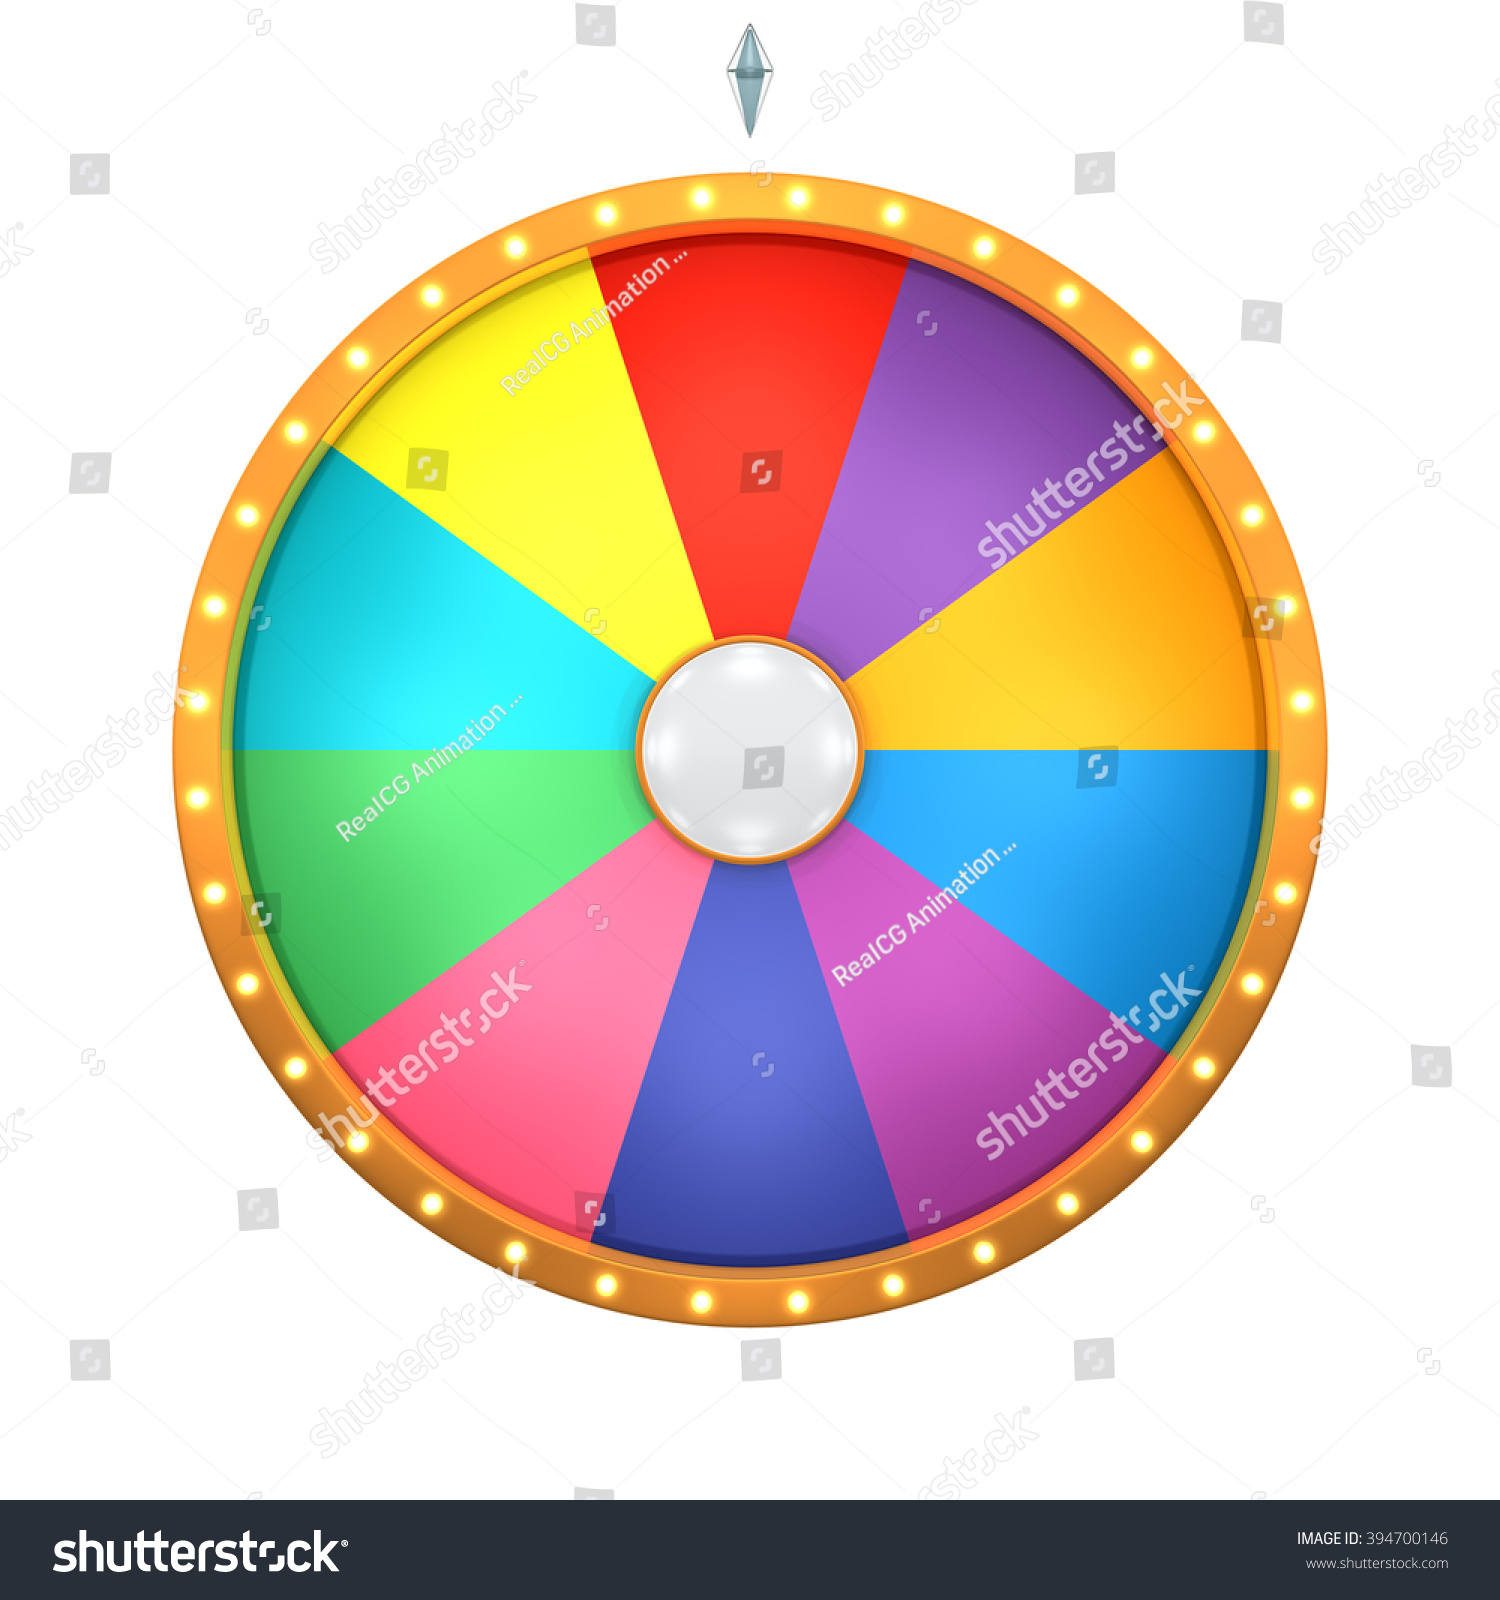 Lucky Spin Represent Wheel Fortune Concept Stock Illustration 394700146 - Shutterstock1500 x 1600